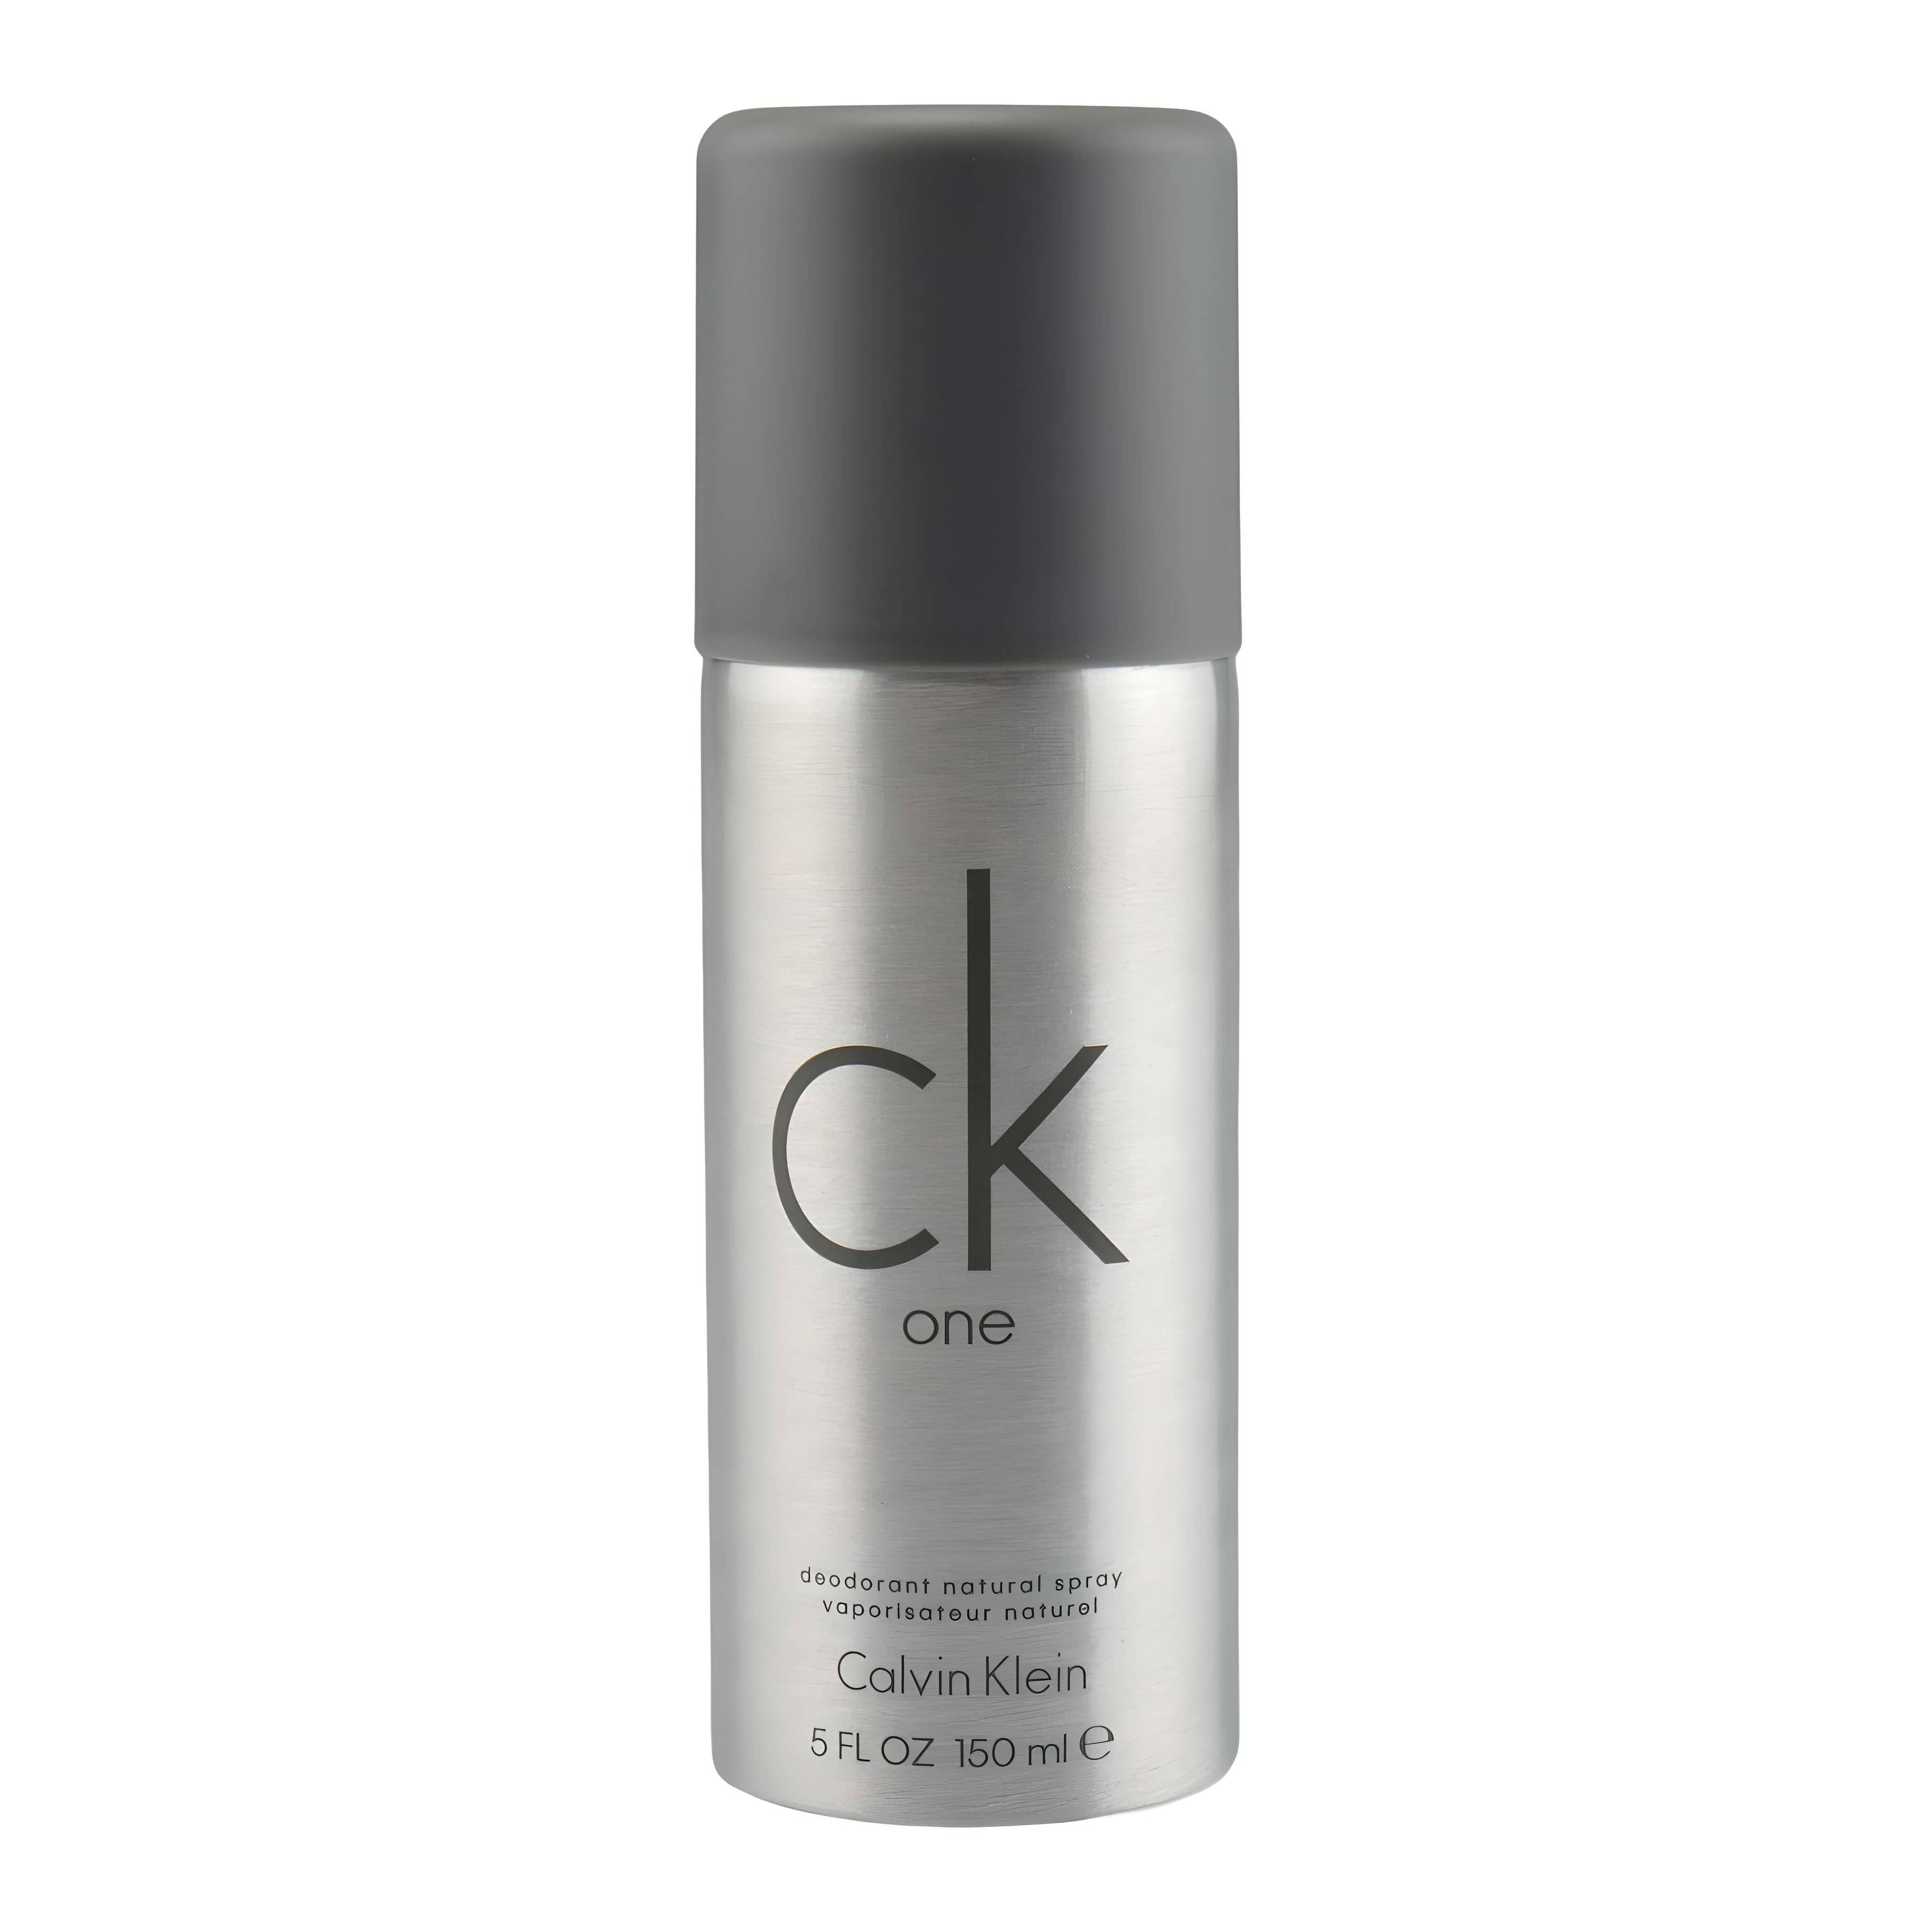 CK ONE Deodorant Spray